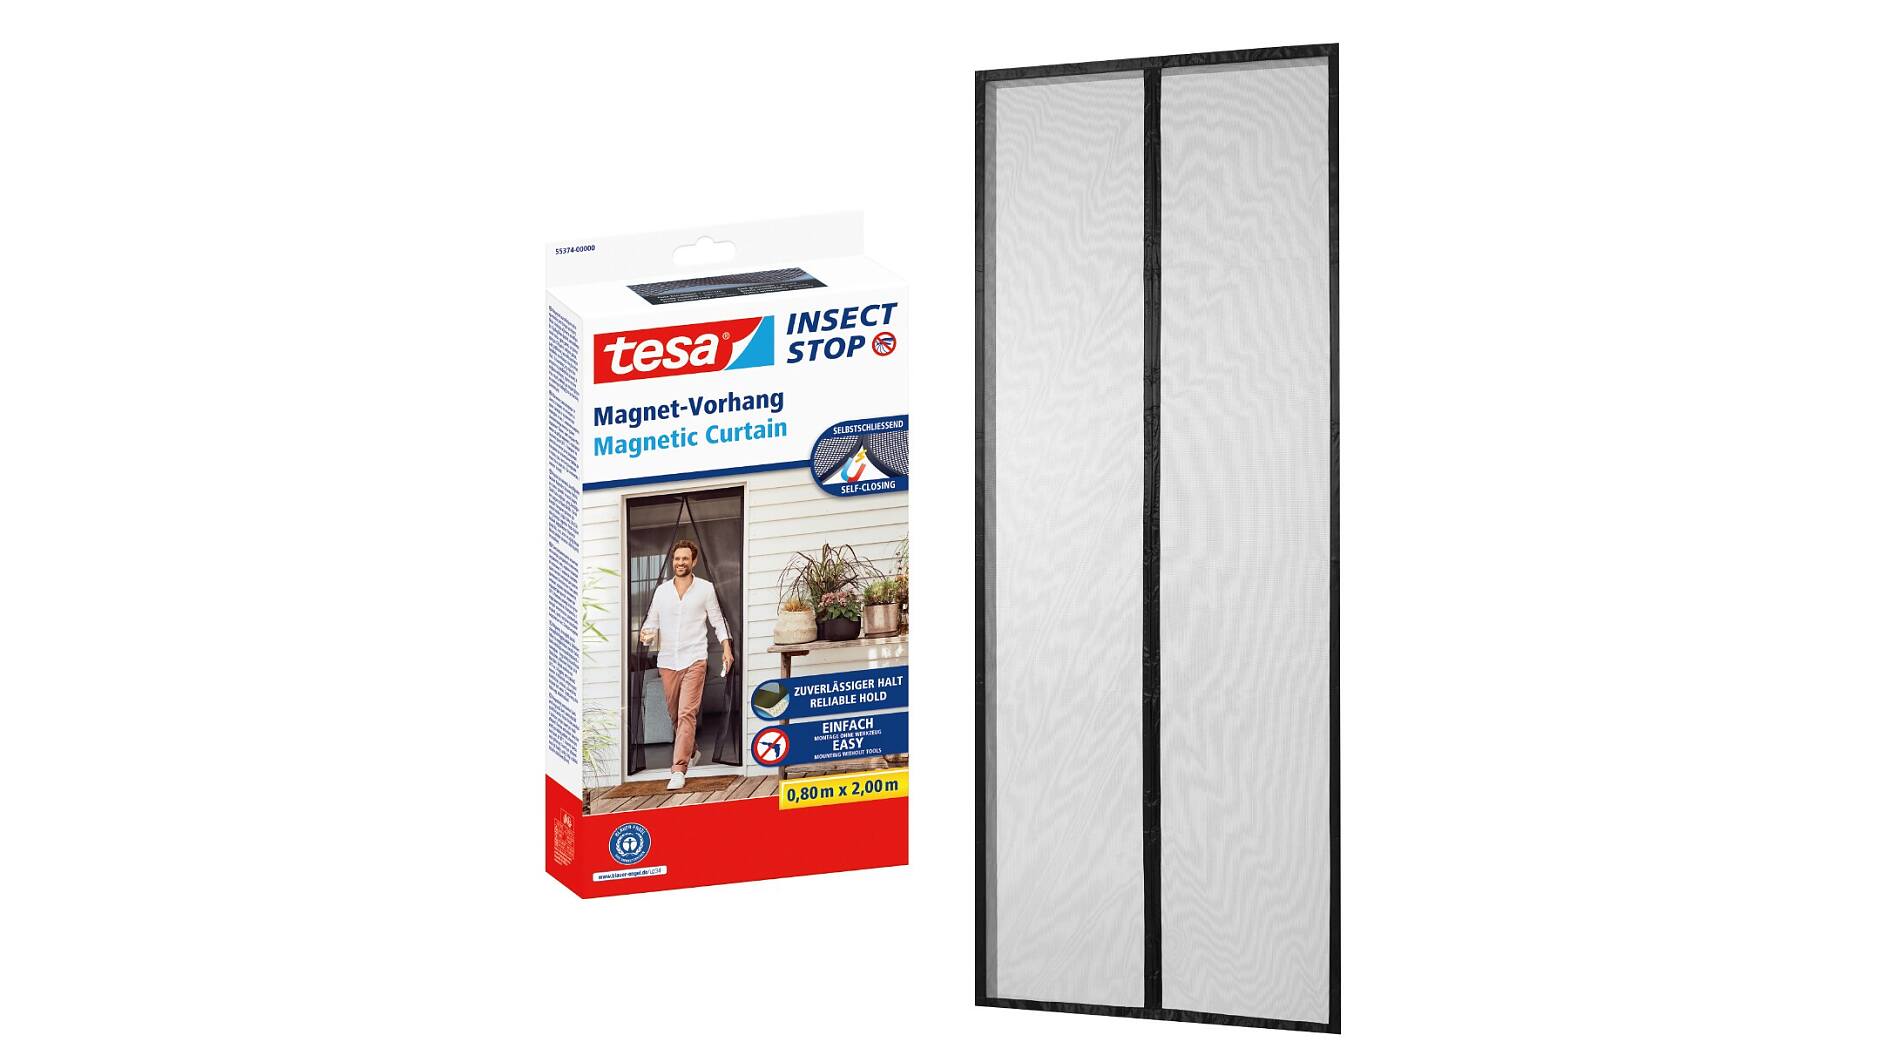 tesa® Insect Stop selbstschließender Magnetvorhang - tesa